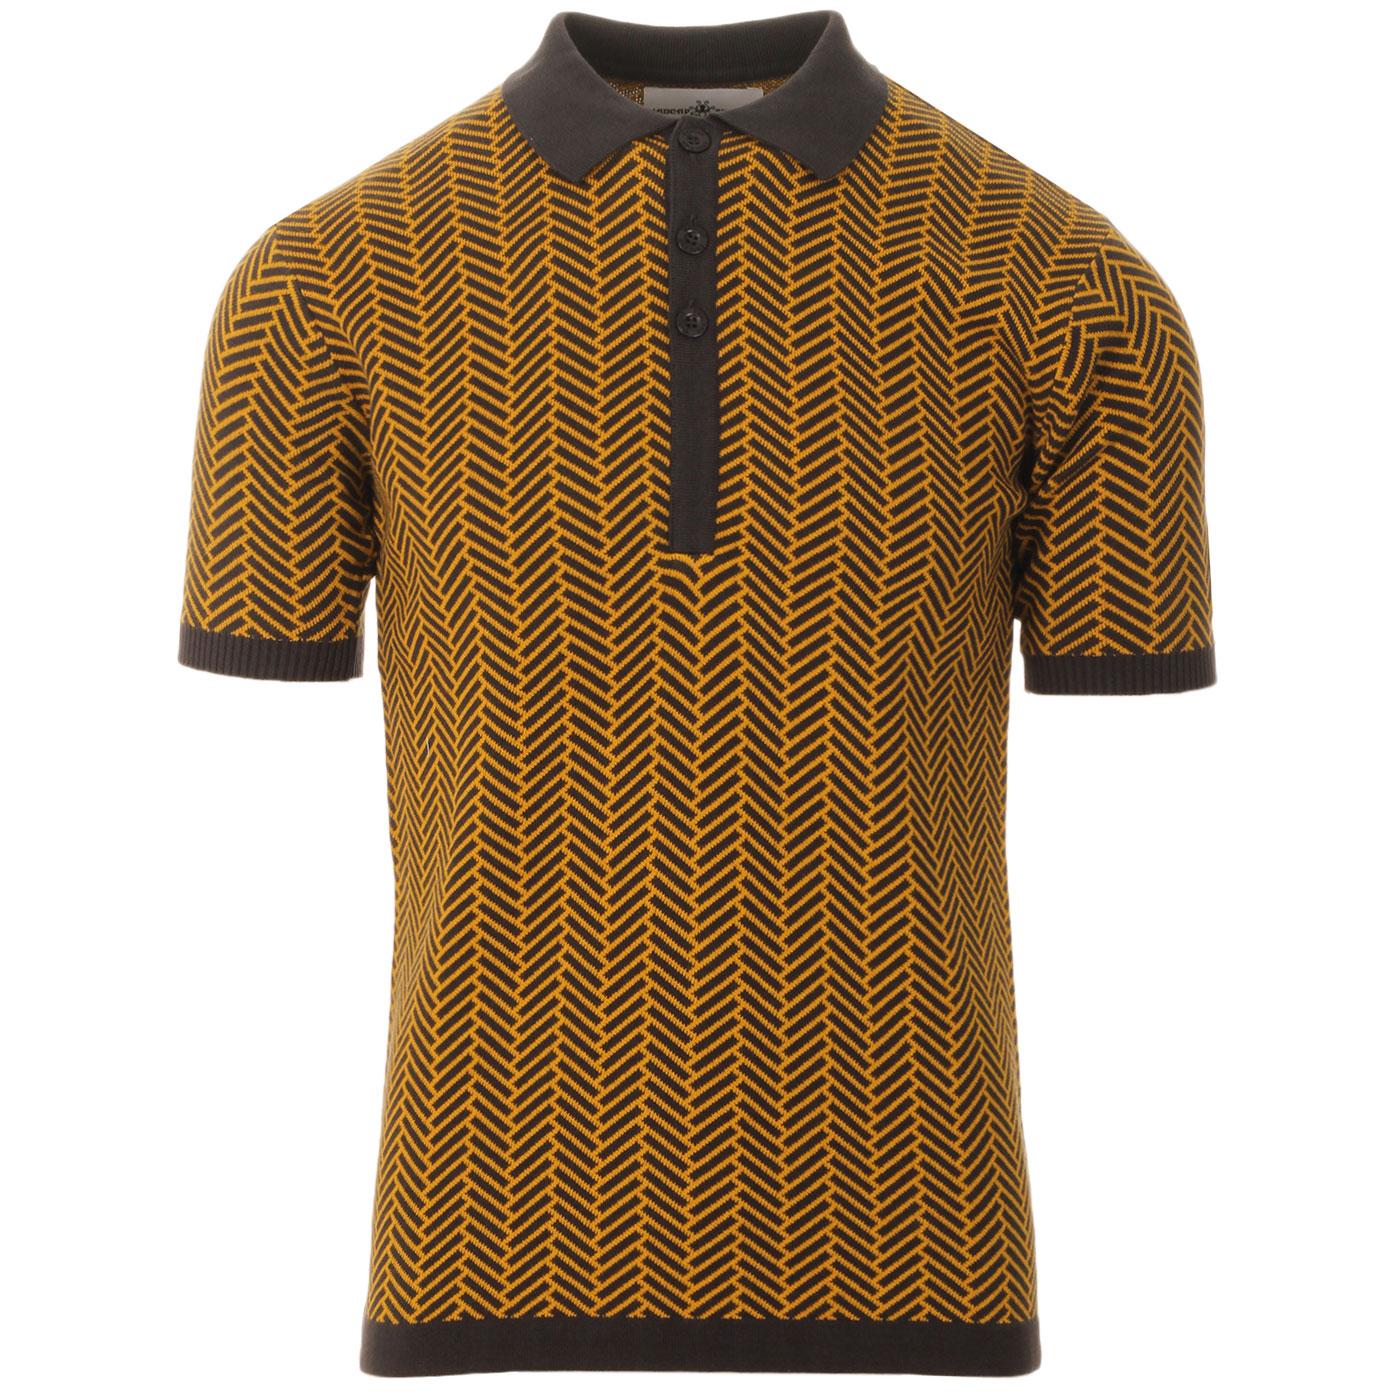 Madcap England Mojo Men's Retro Mod Dash Stripe Knit Polo Shirt in Arrowood